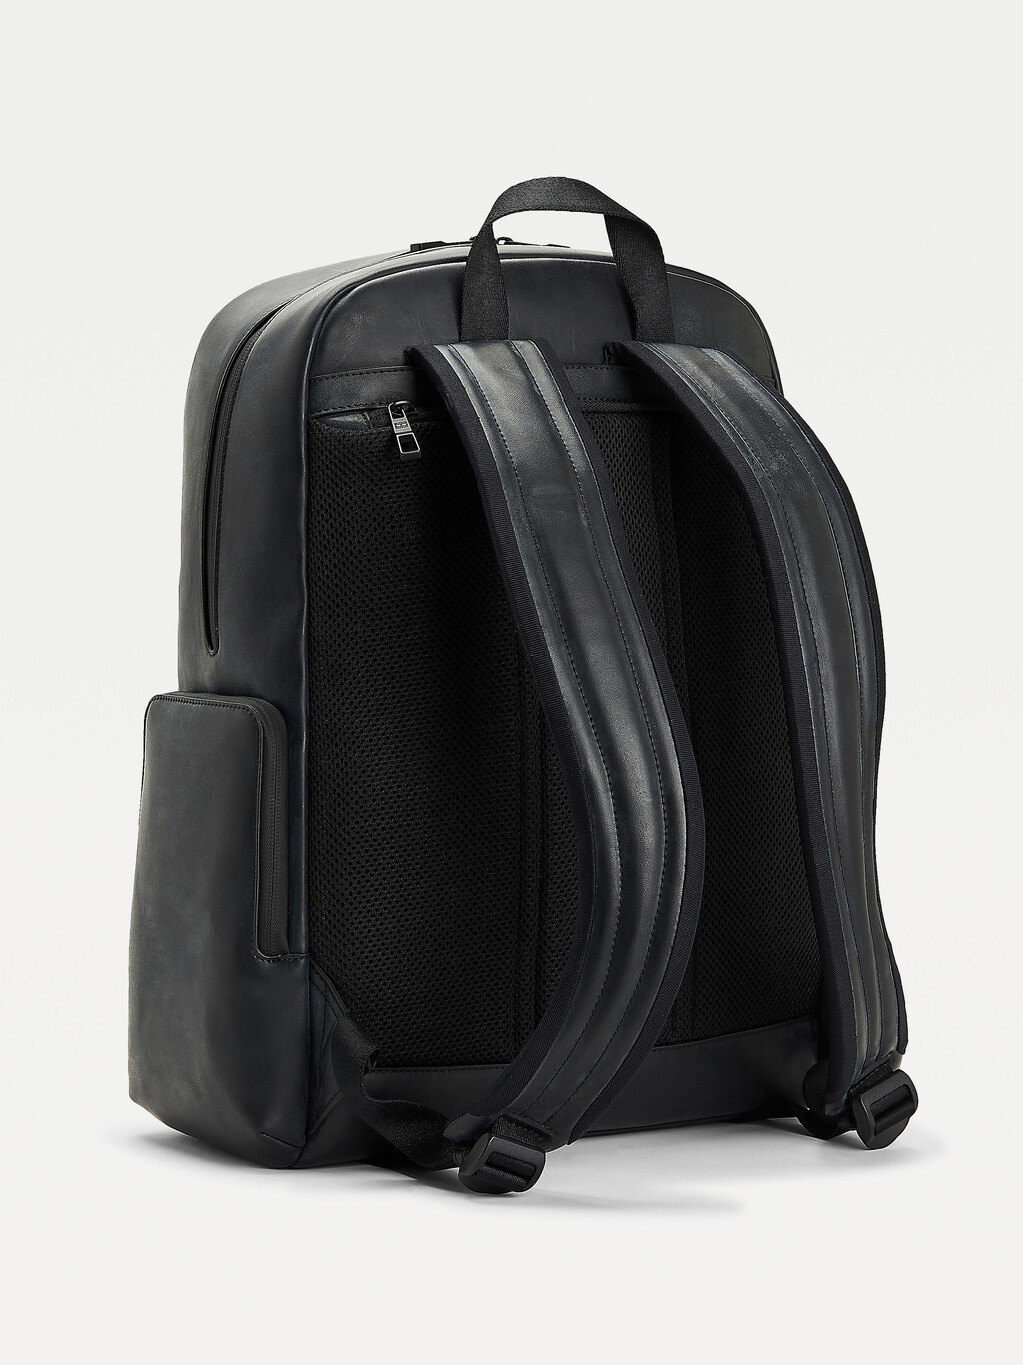 Th Tech Commuter Backpack